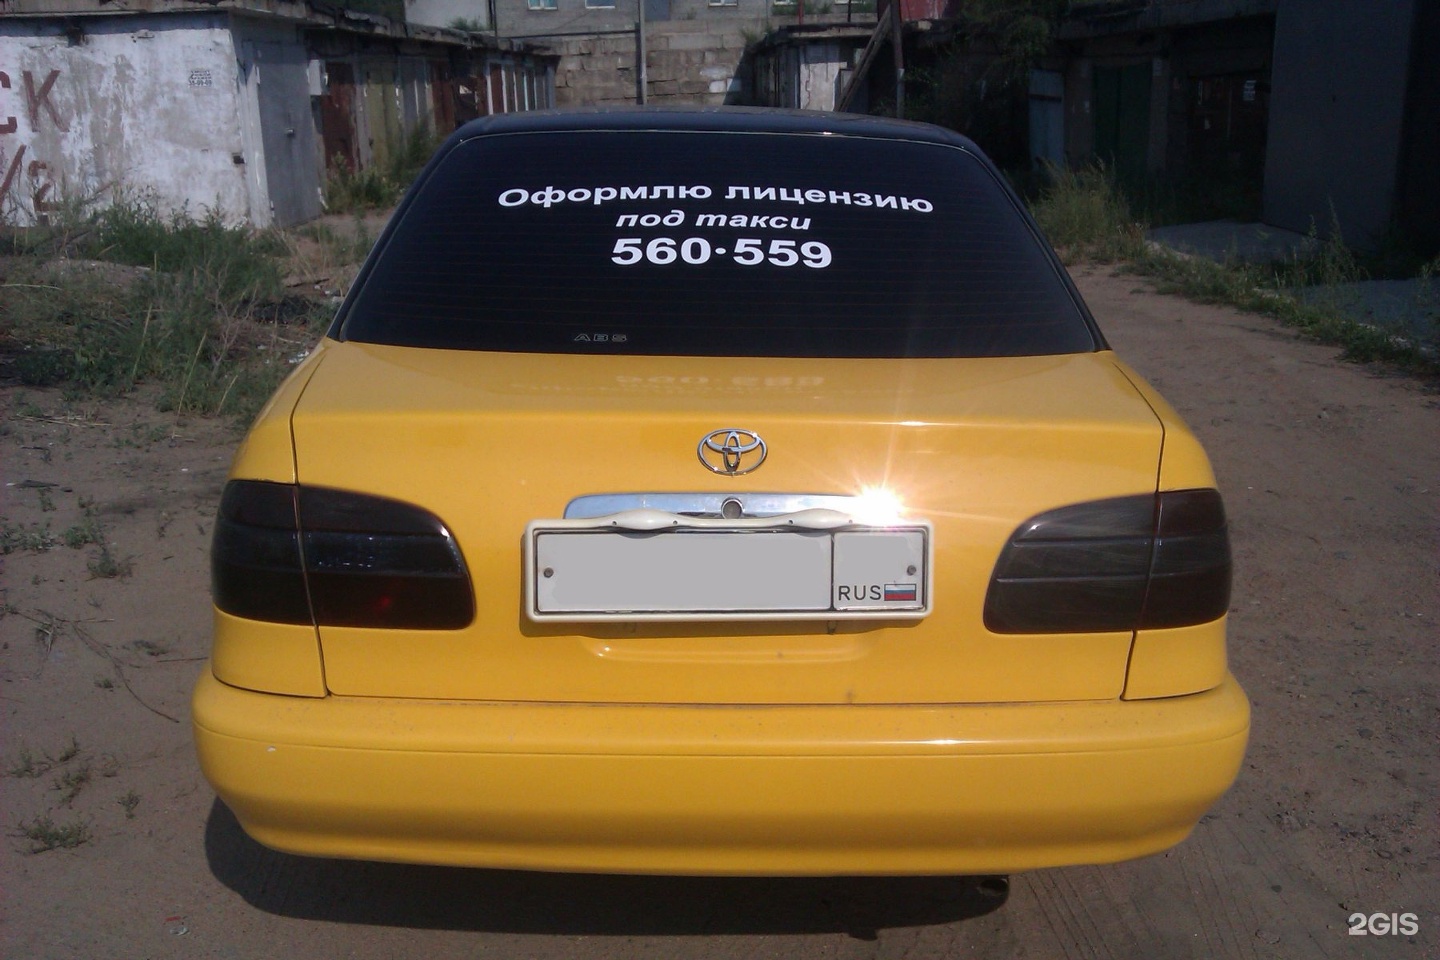 Телефон такси в улан удэ. Такси Улан-Удэ.